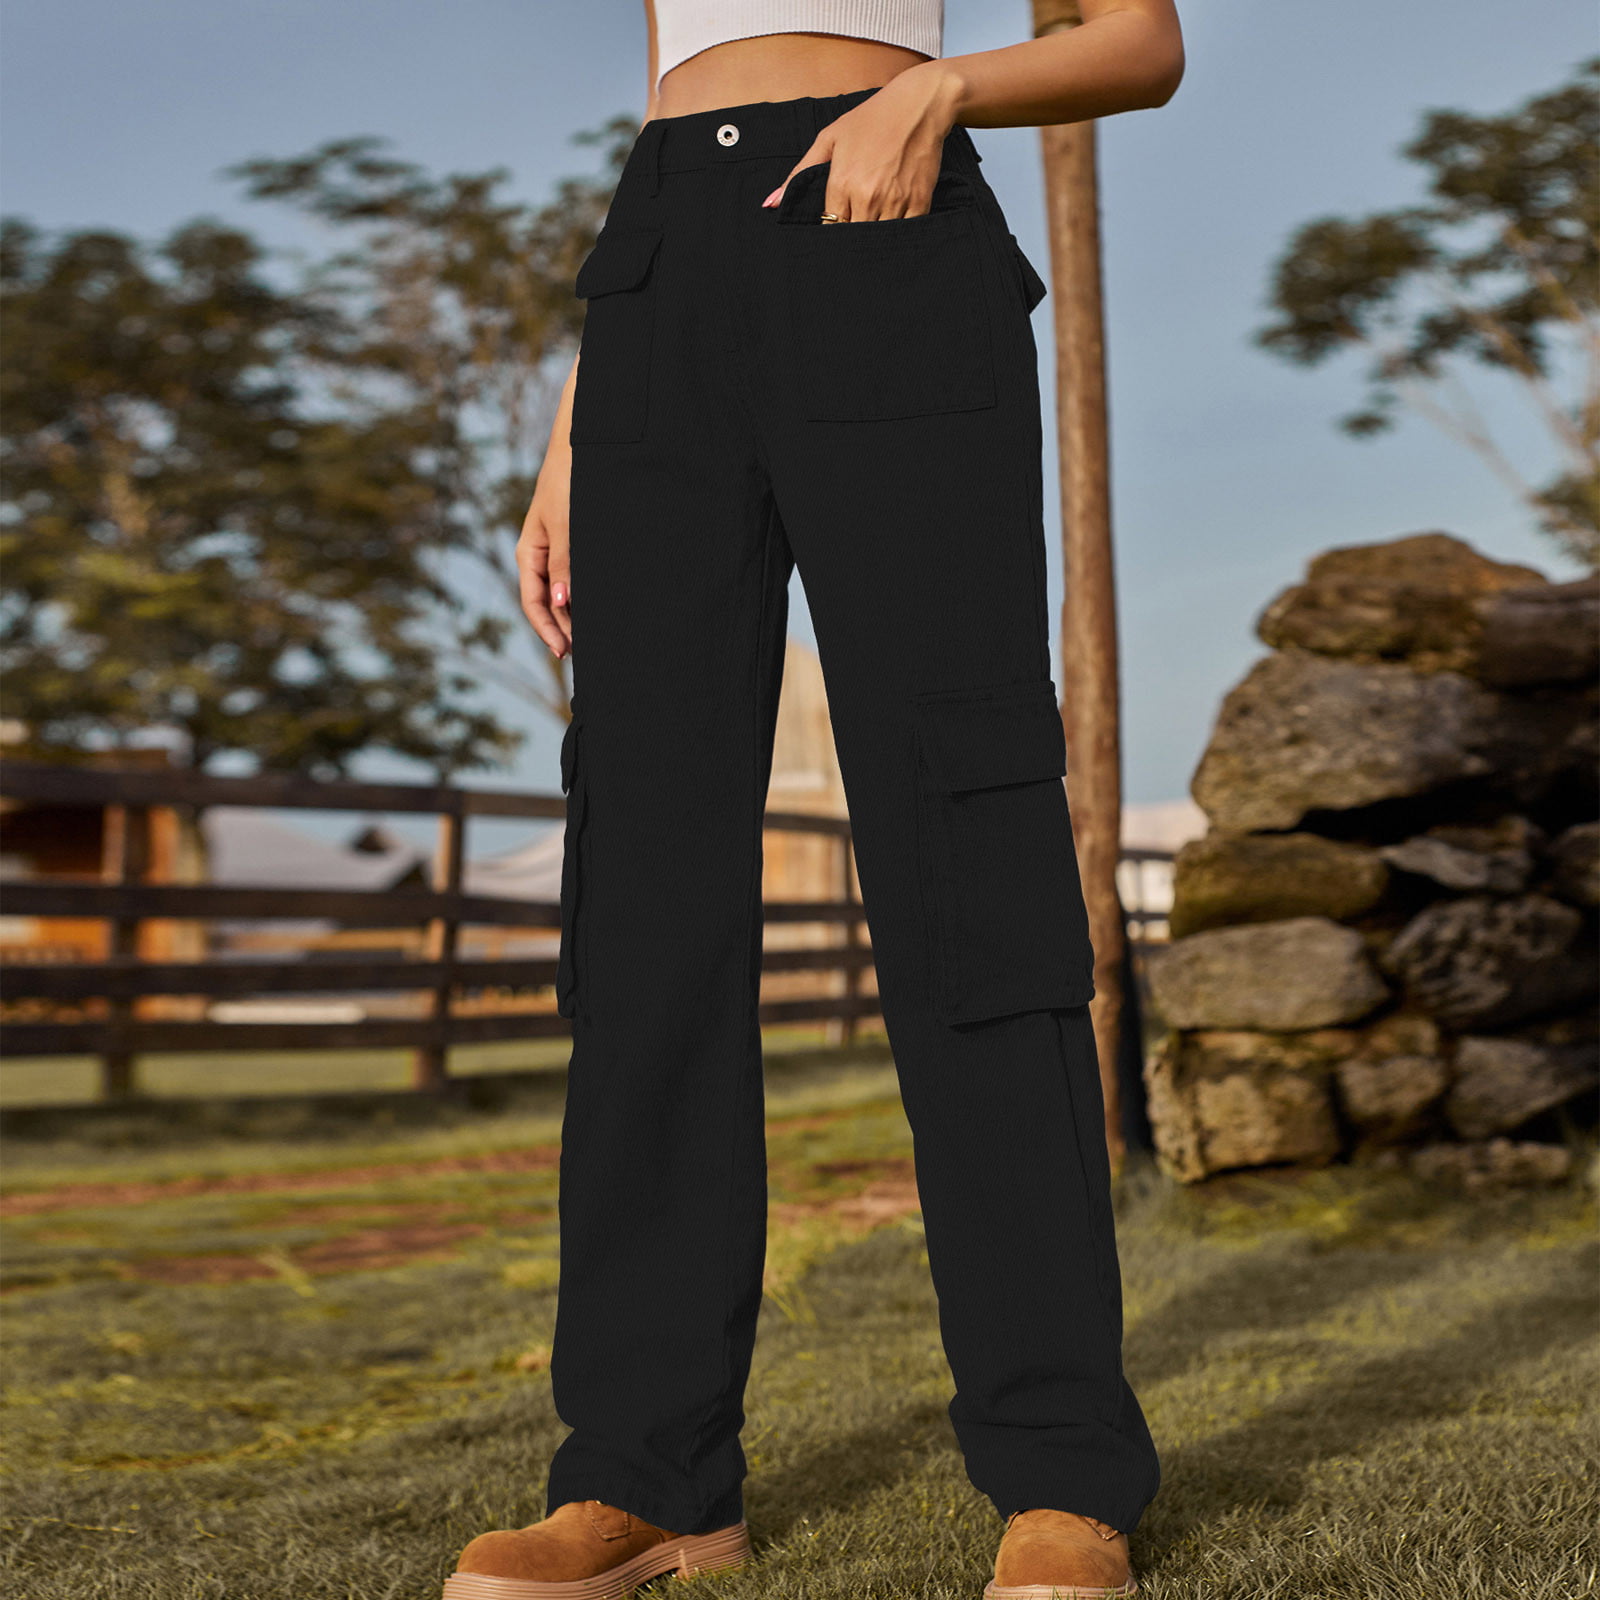 Jyeity Women'S Blazer Fashion Casual, Spring/Pocket Button Mid Waist Tight  Pants Navy Blue Dress Pants For Women Black Size XL(US:10) 